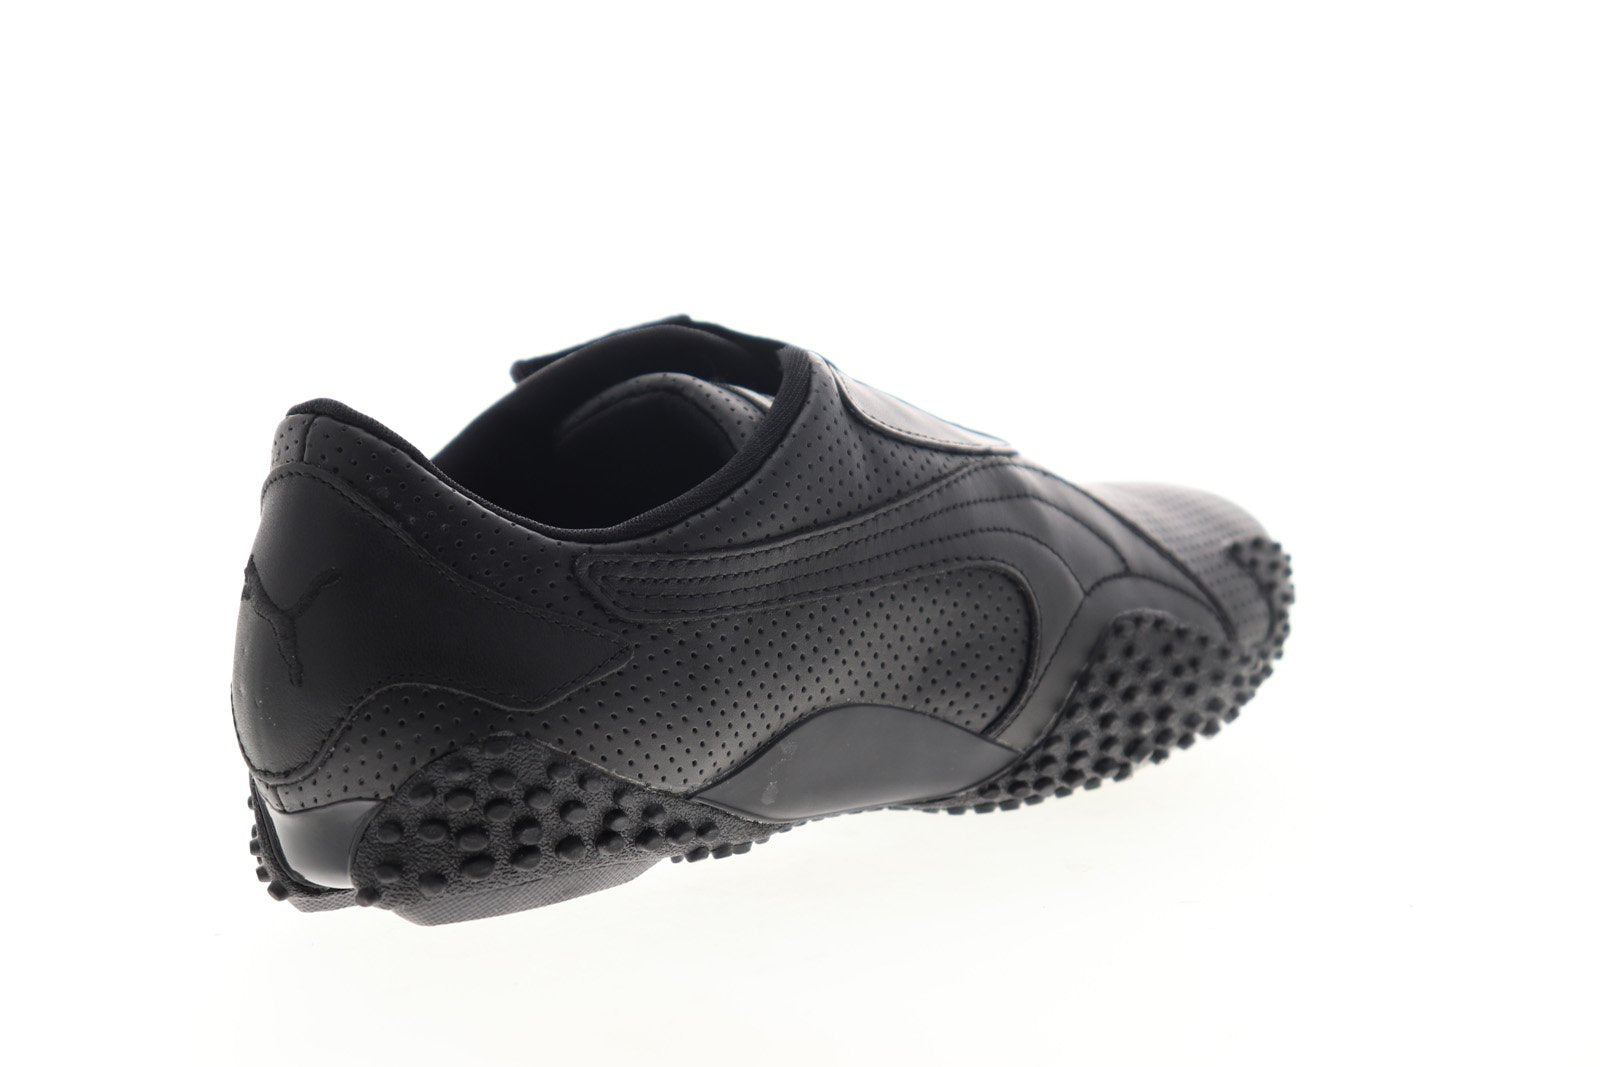 Puma Mostro Leather 35141302 Mens Black Lifestyle Sneakers - Ruze